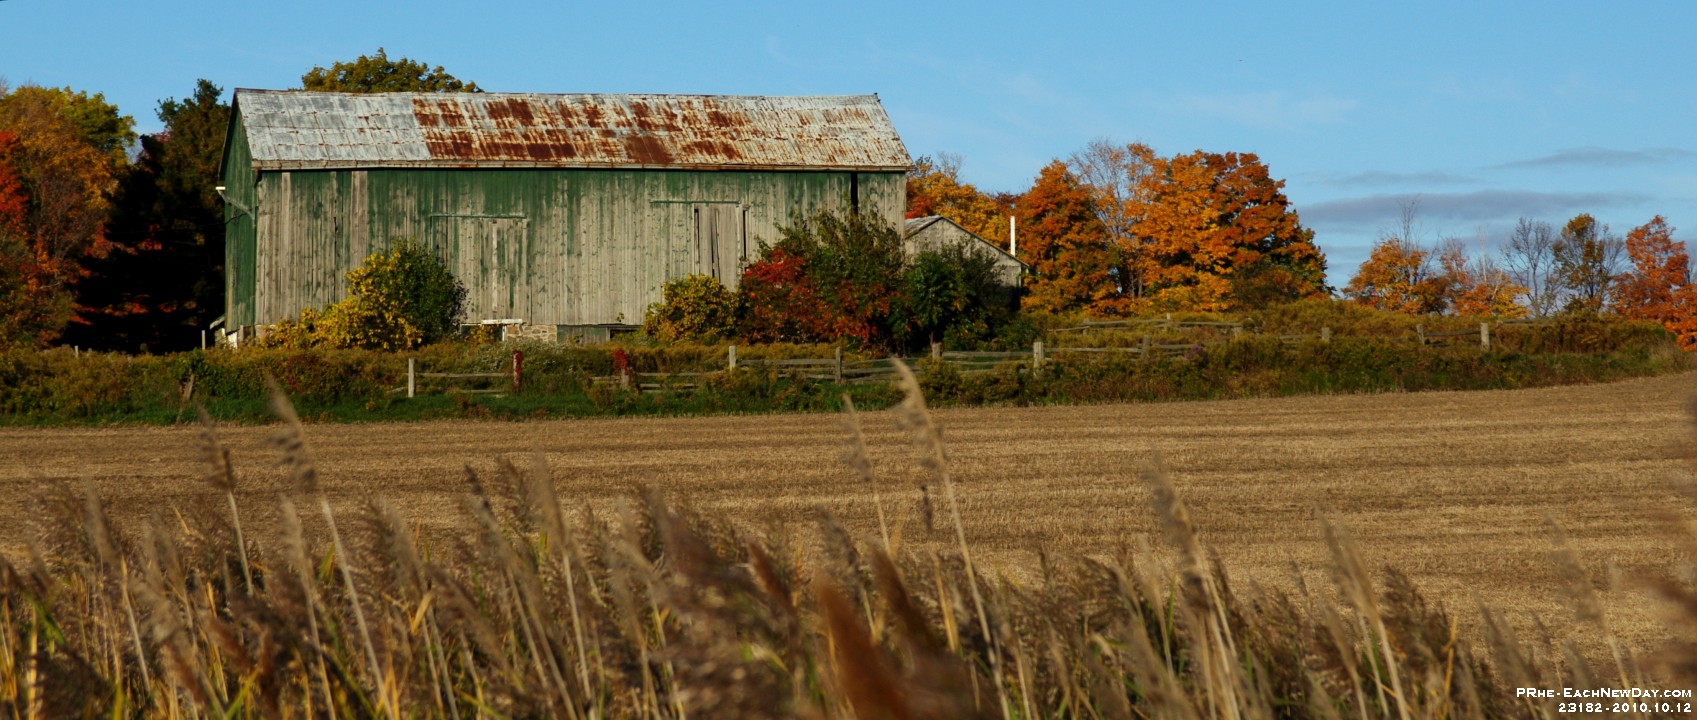 23182RoCrLe - Autumn farm along Taunton Road